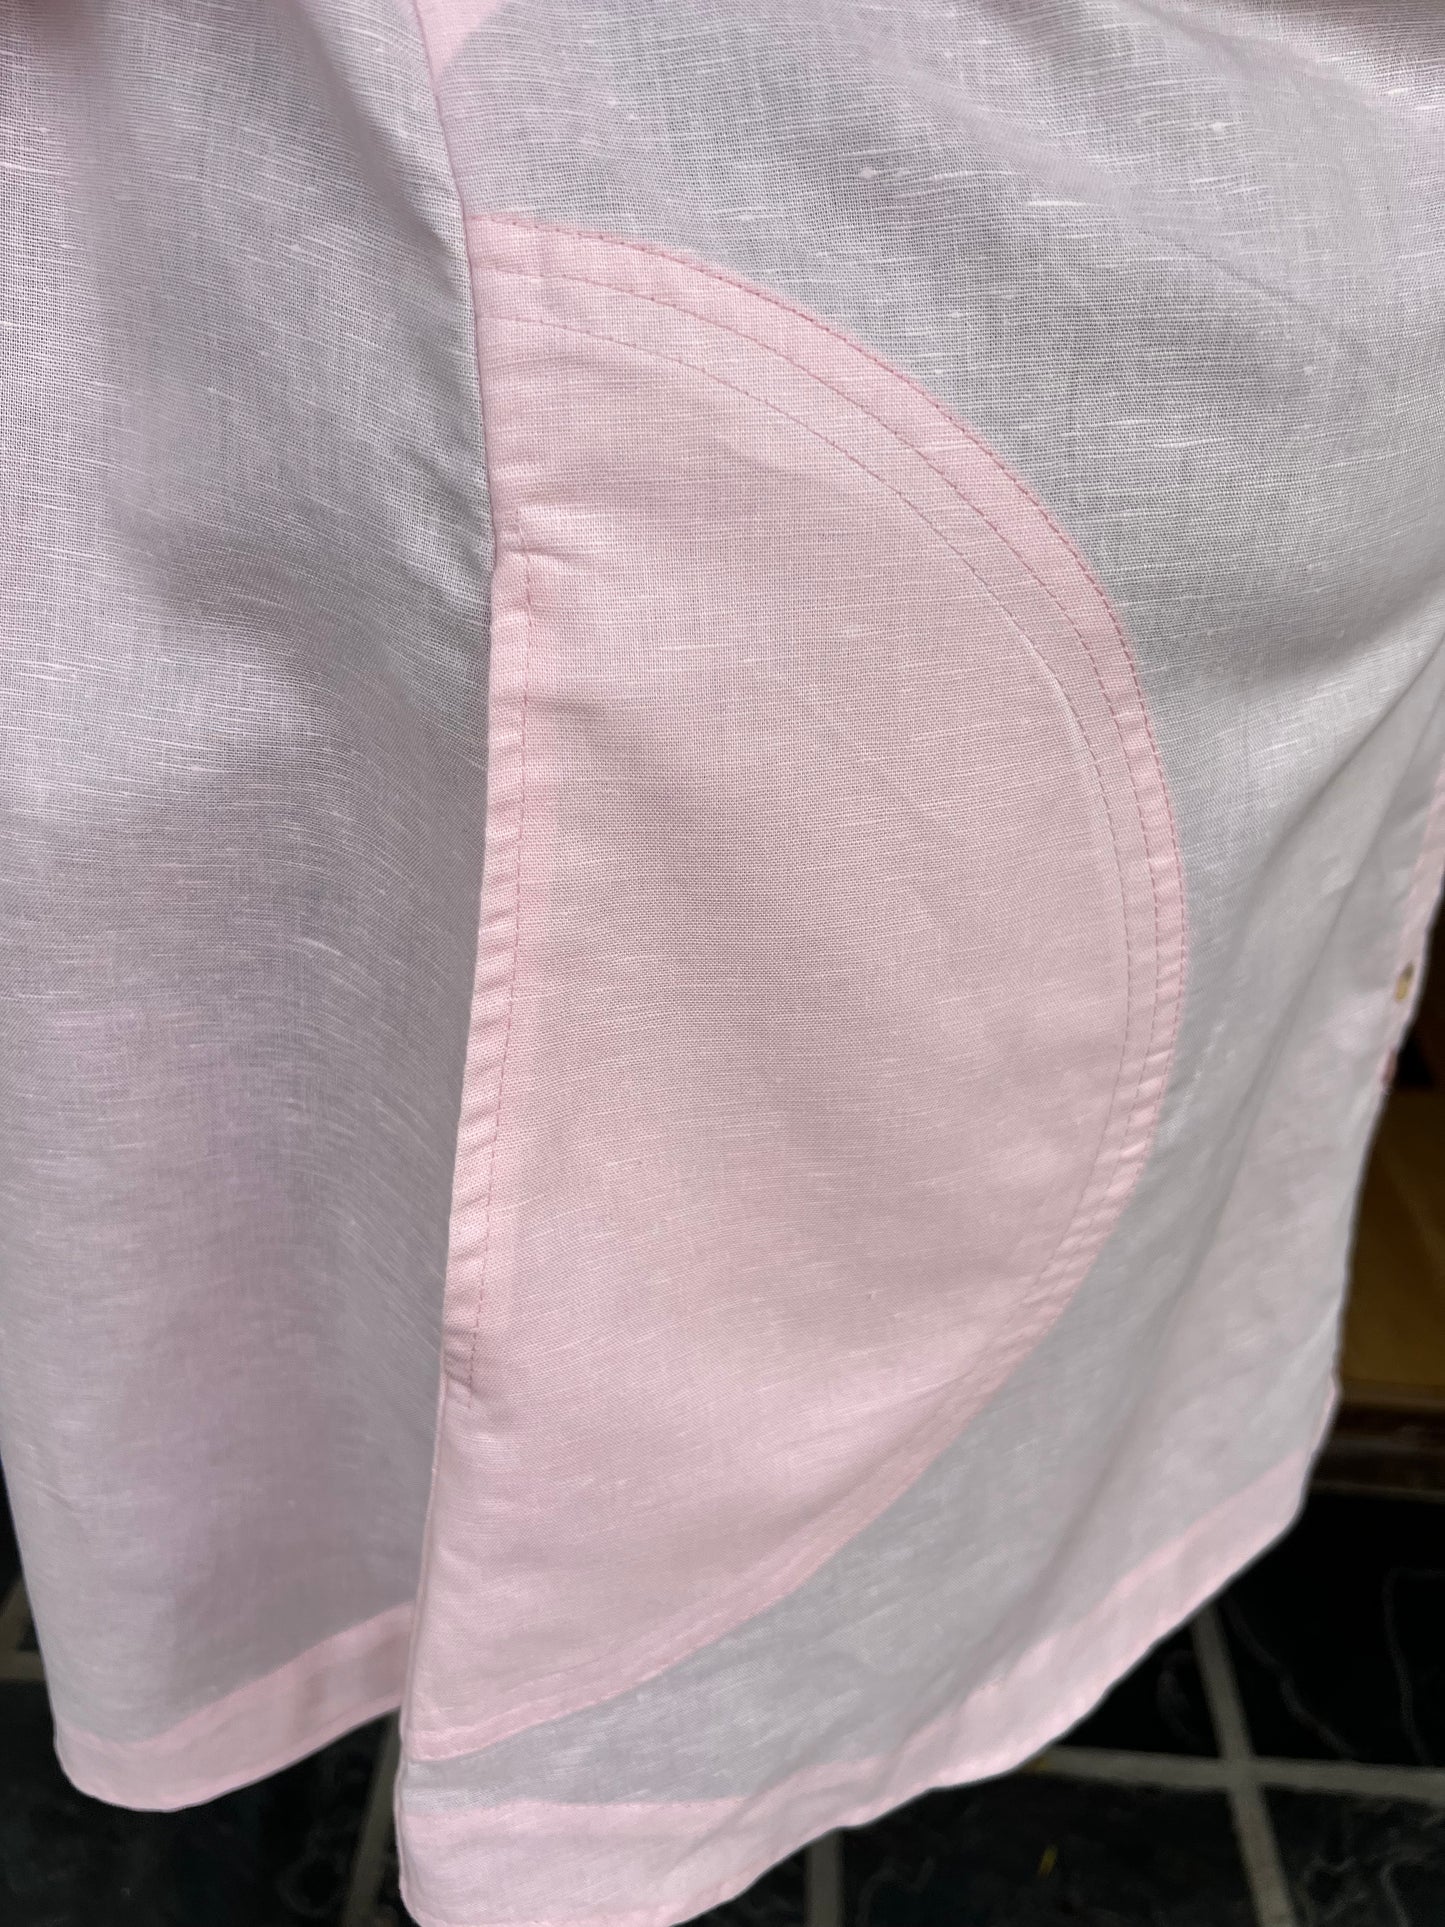 The Pink Double Button Linen Shirt